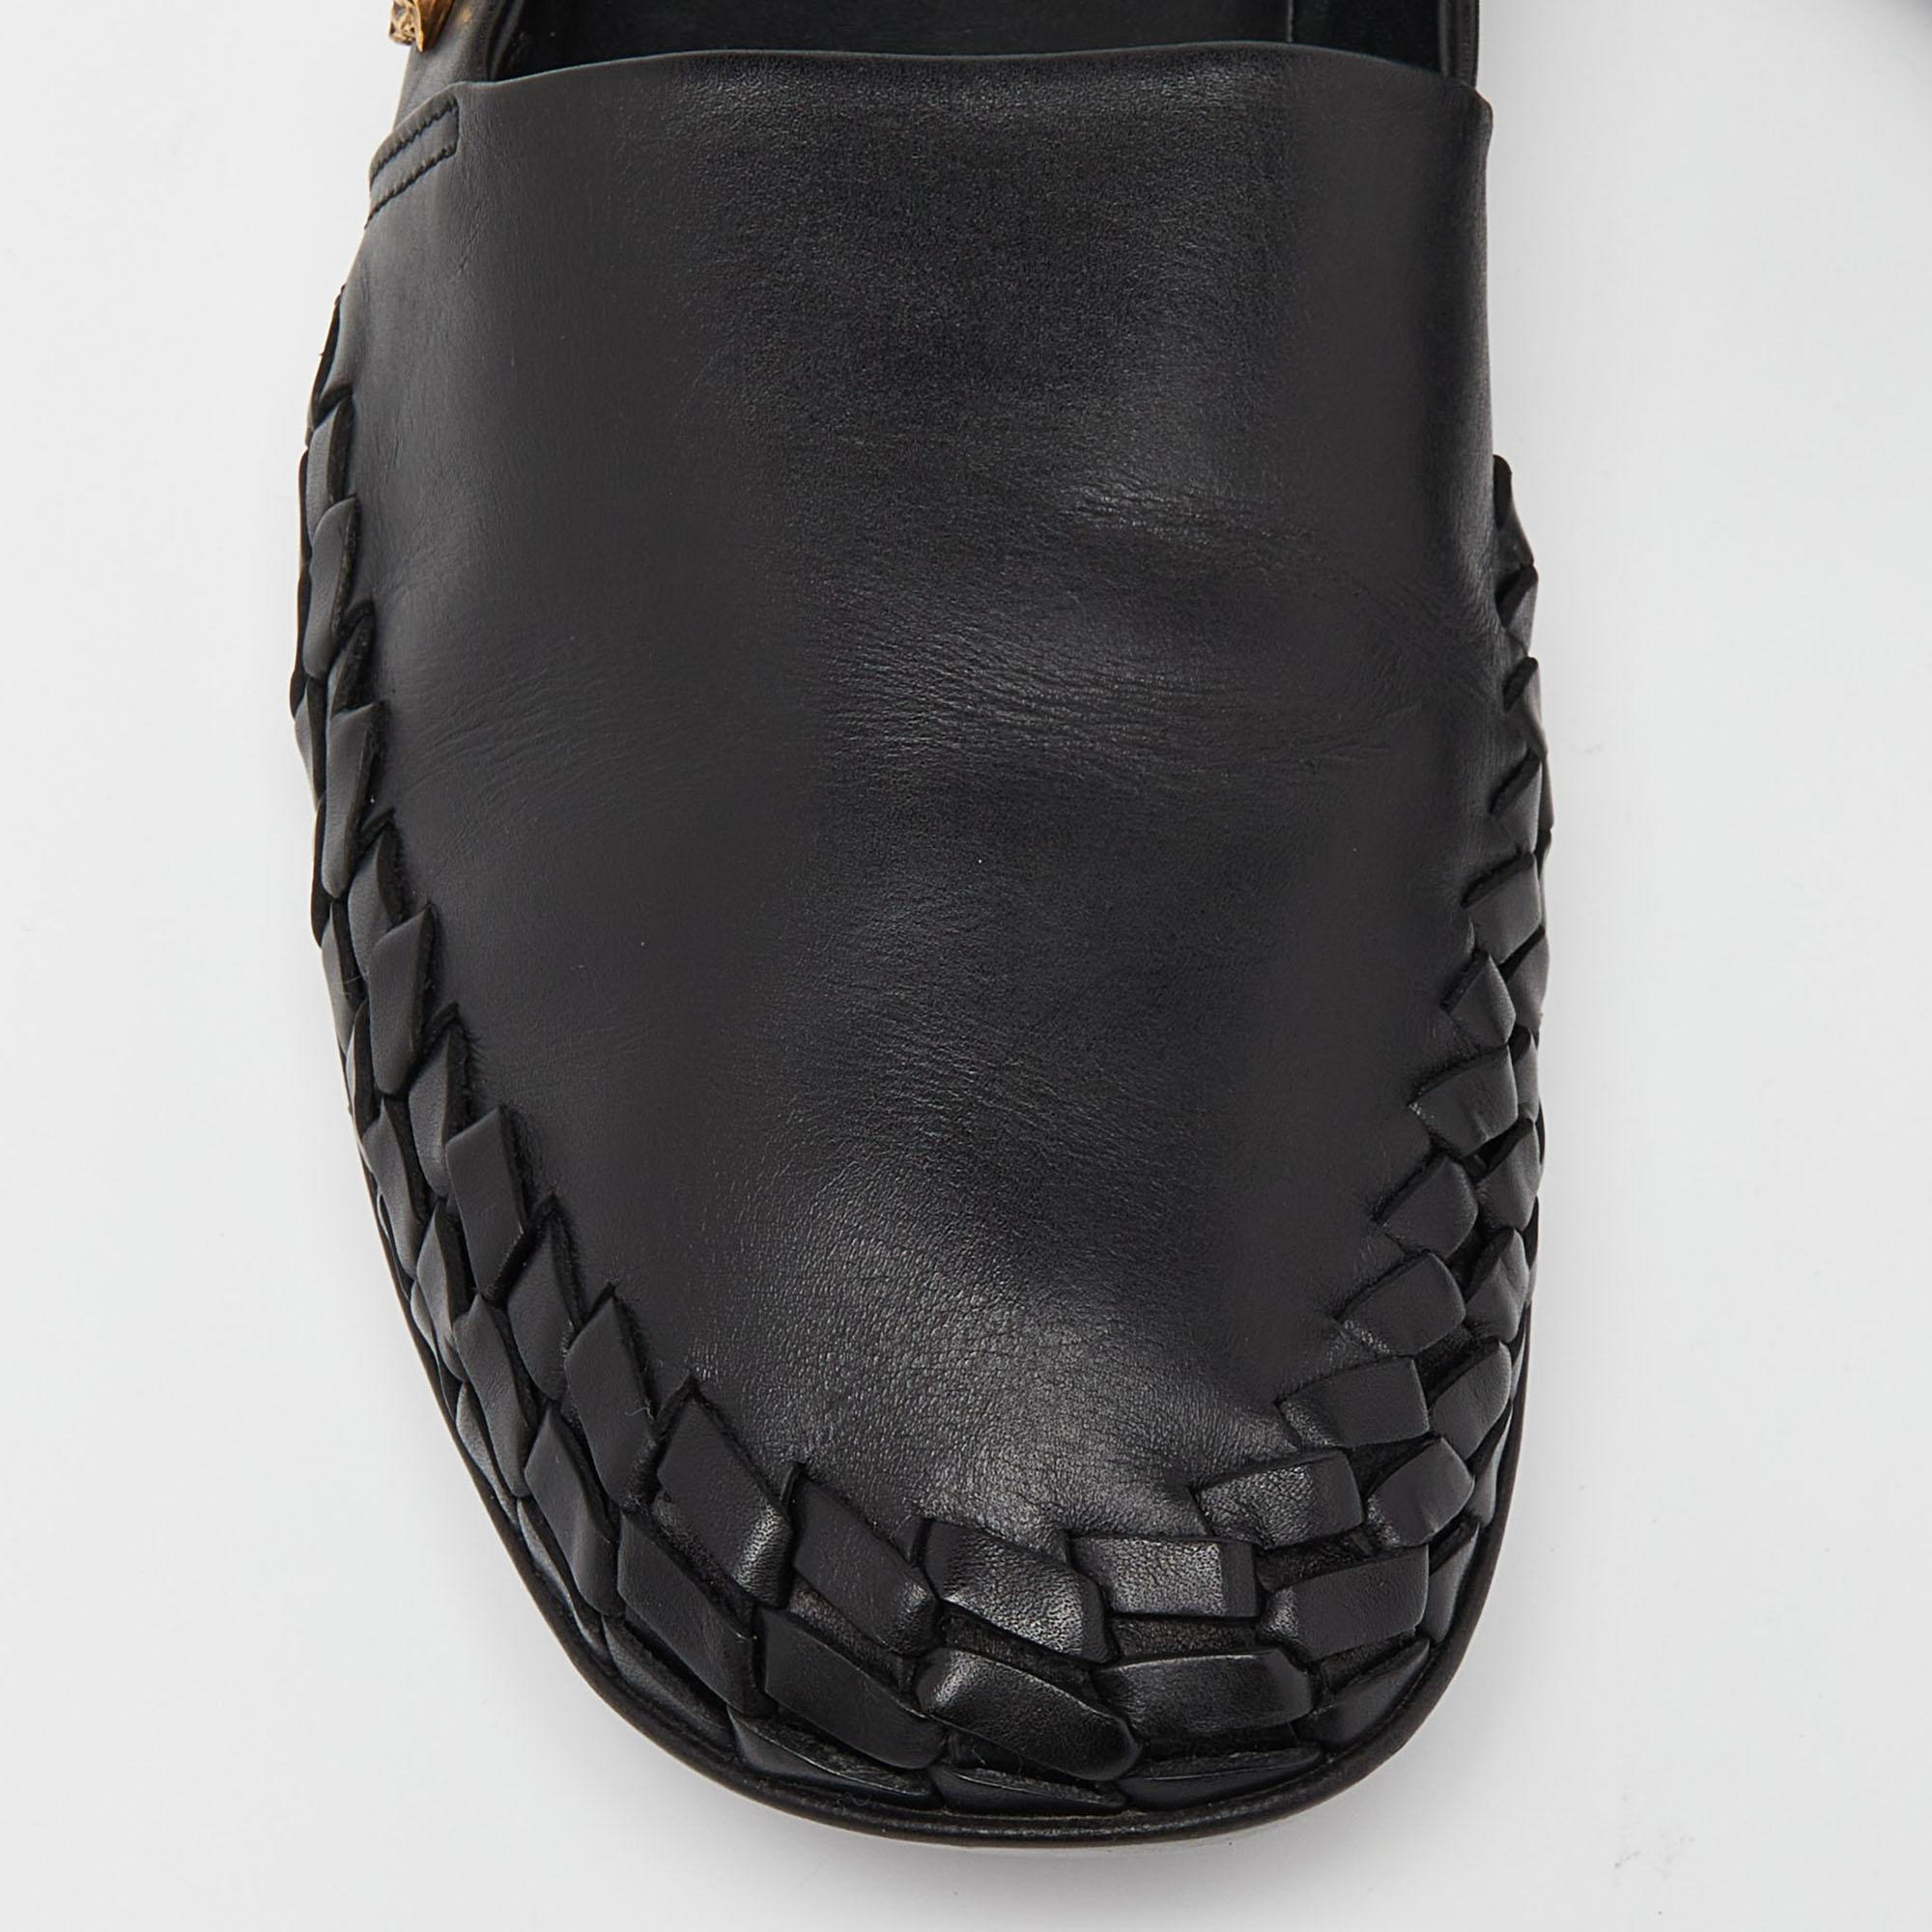 Versace Black Leather Medusa Slip On Loafers Size 42